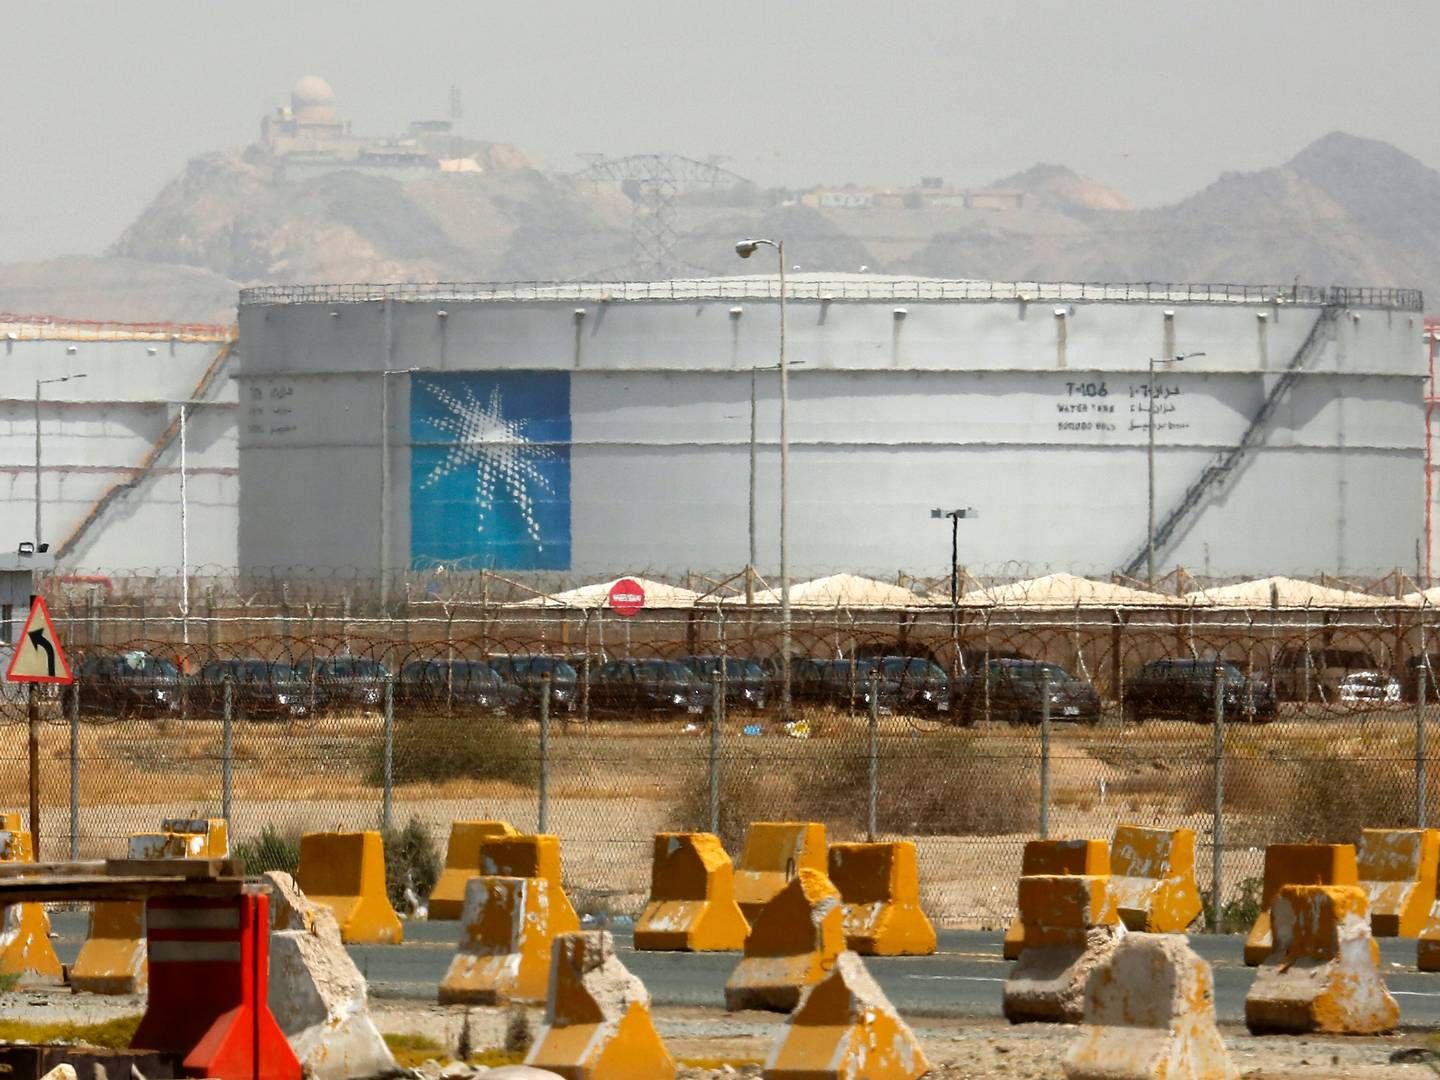 Storage tanks are seen at the North Jiddah bulk plant, an Aramco oil facility, in Jiddah, Saudi Arabia. | Photo: Amr Nabil/AP/Ritzau Scanpix